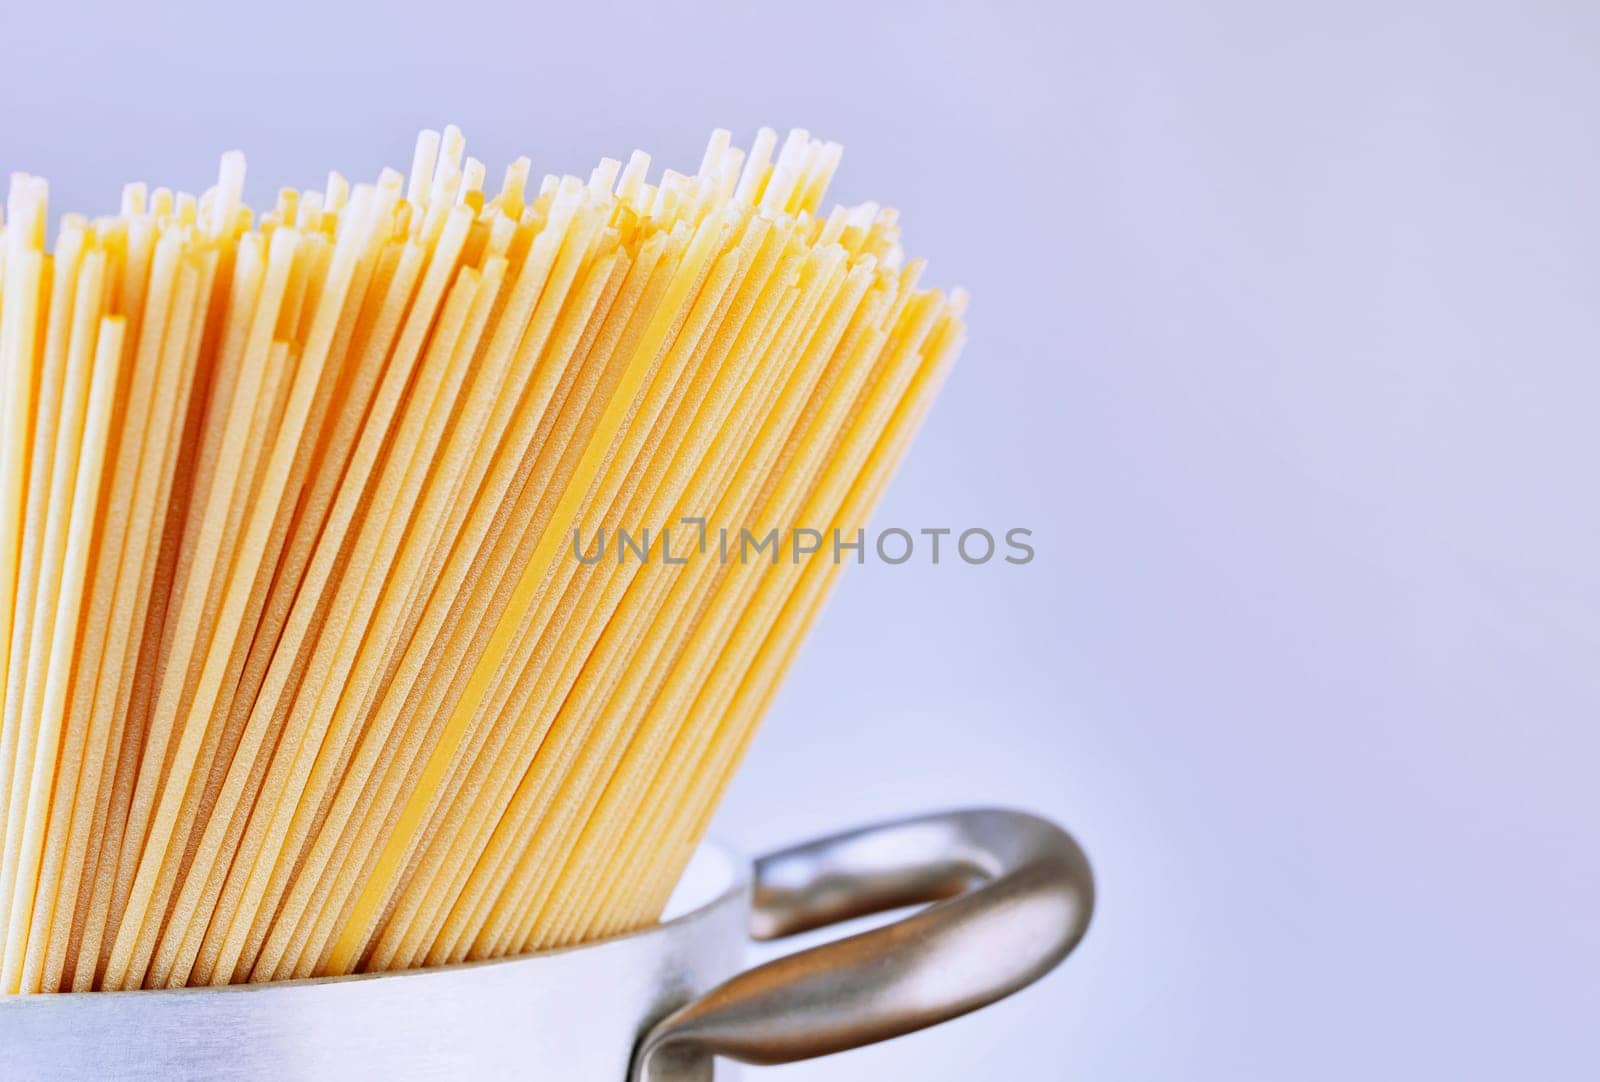 Preparing pasta spaghetti by victimewalker